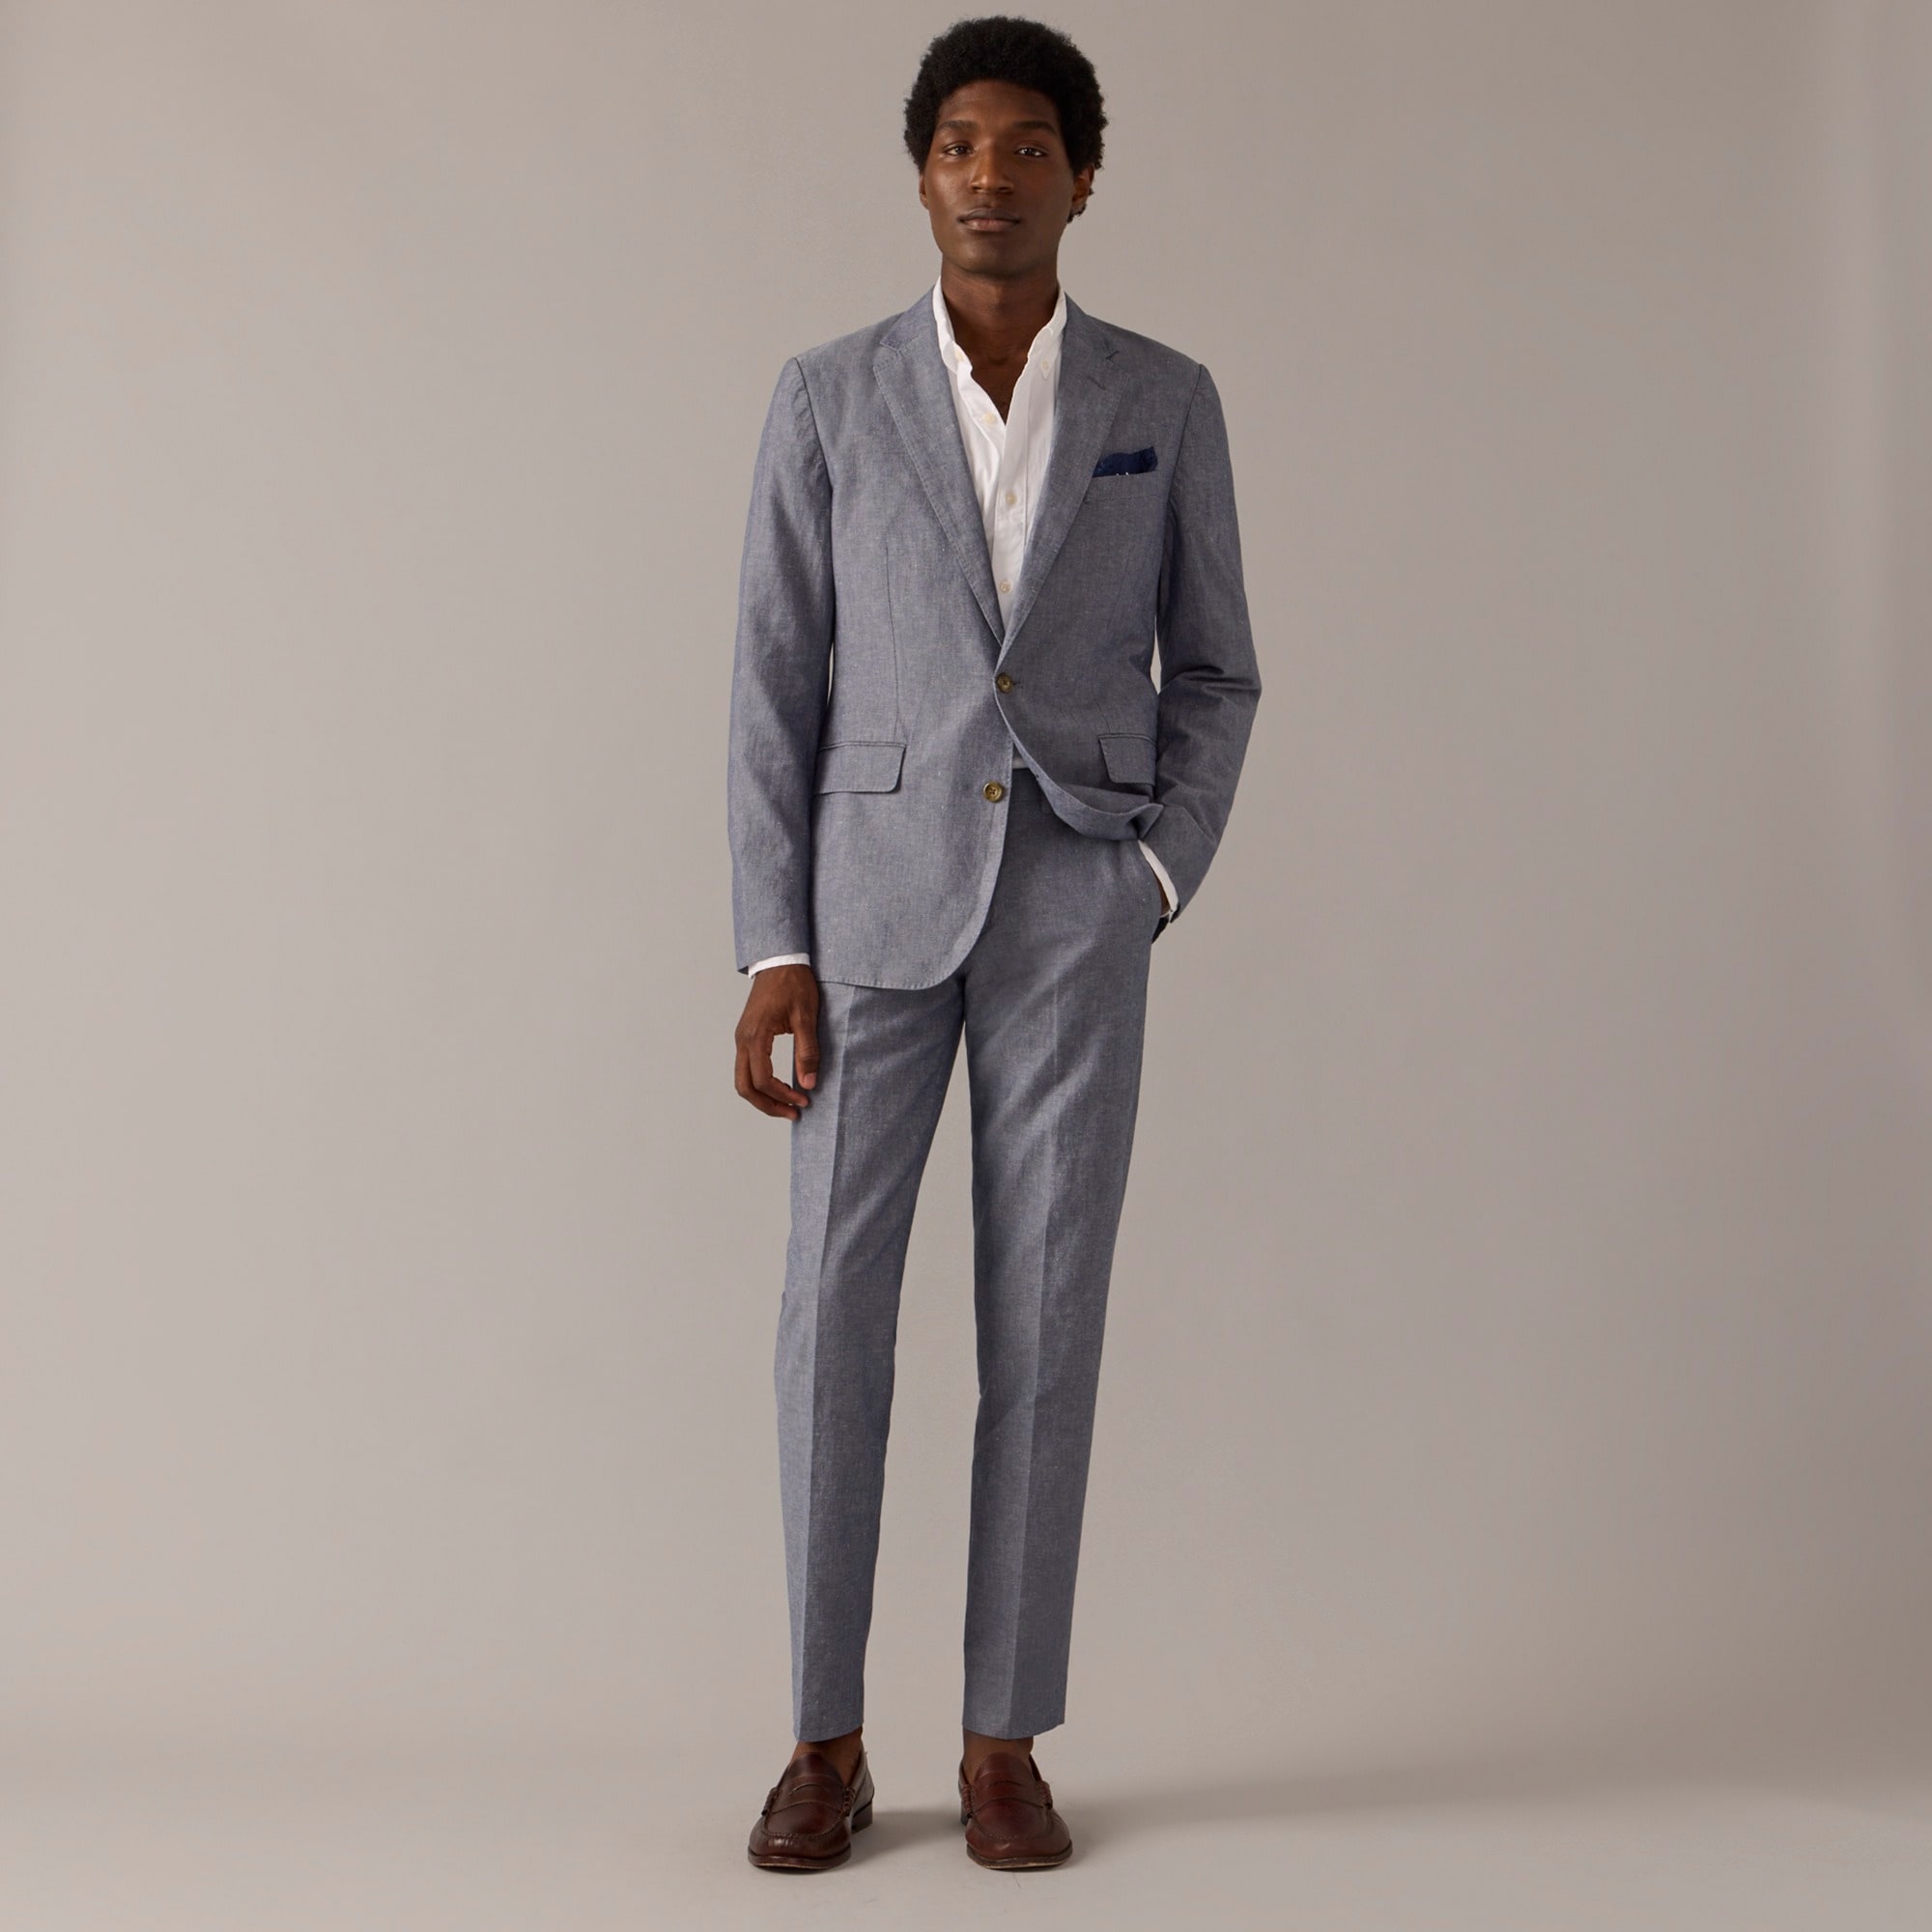 j.crew: ludlow slim-fit unstructured suit jacket in irish cotton-linen blend for men